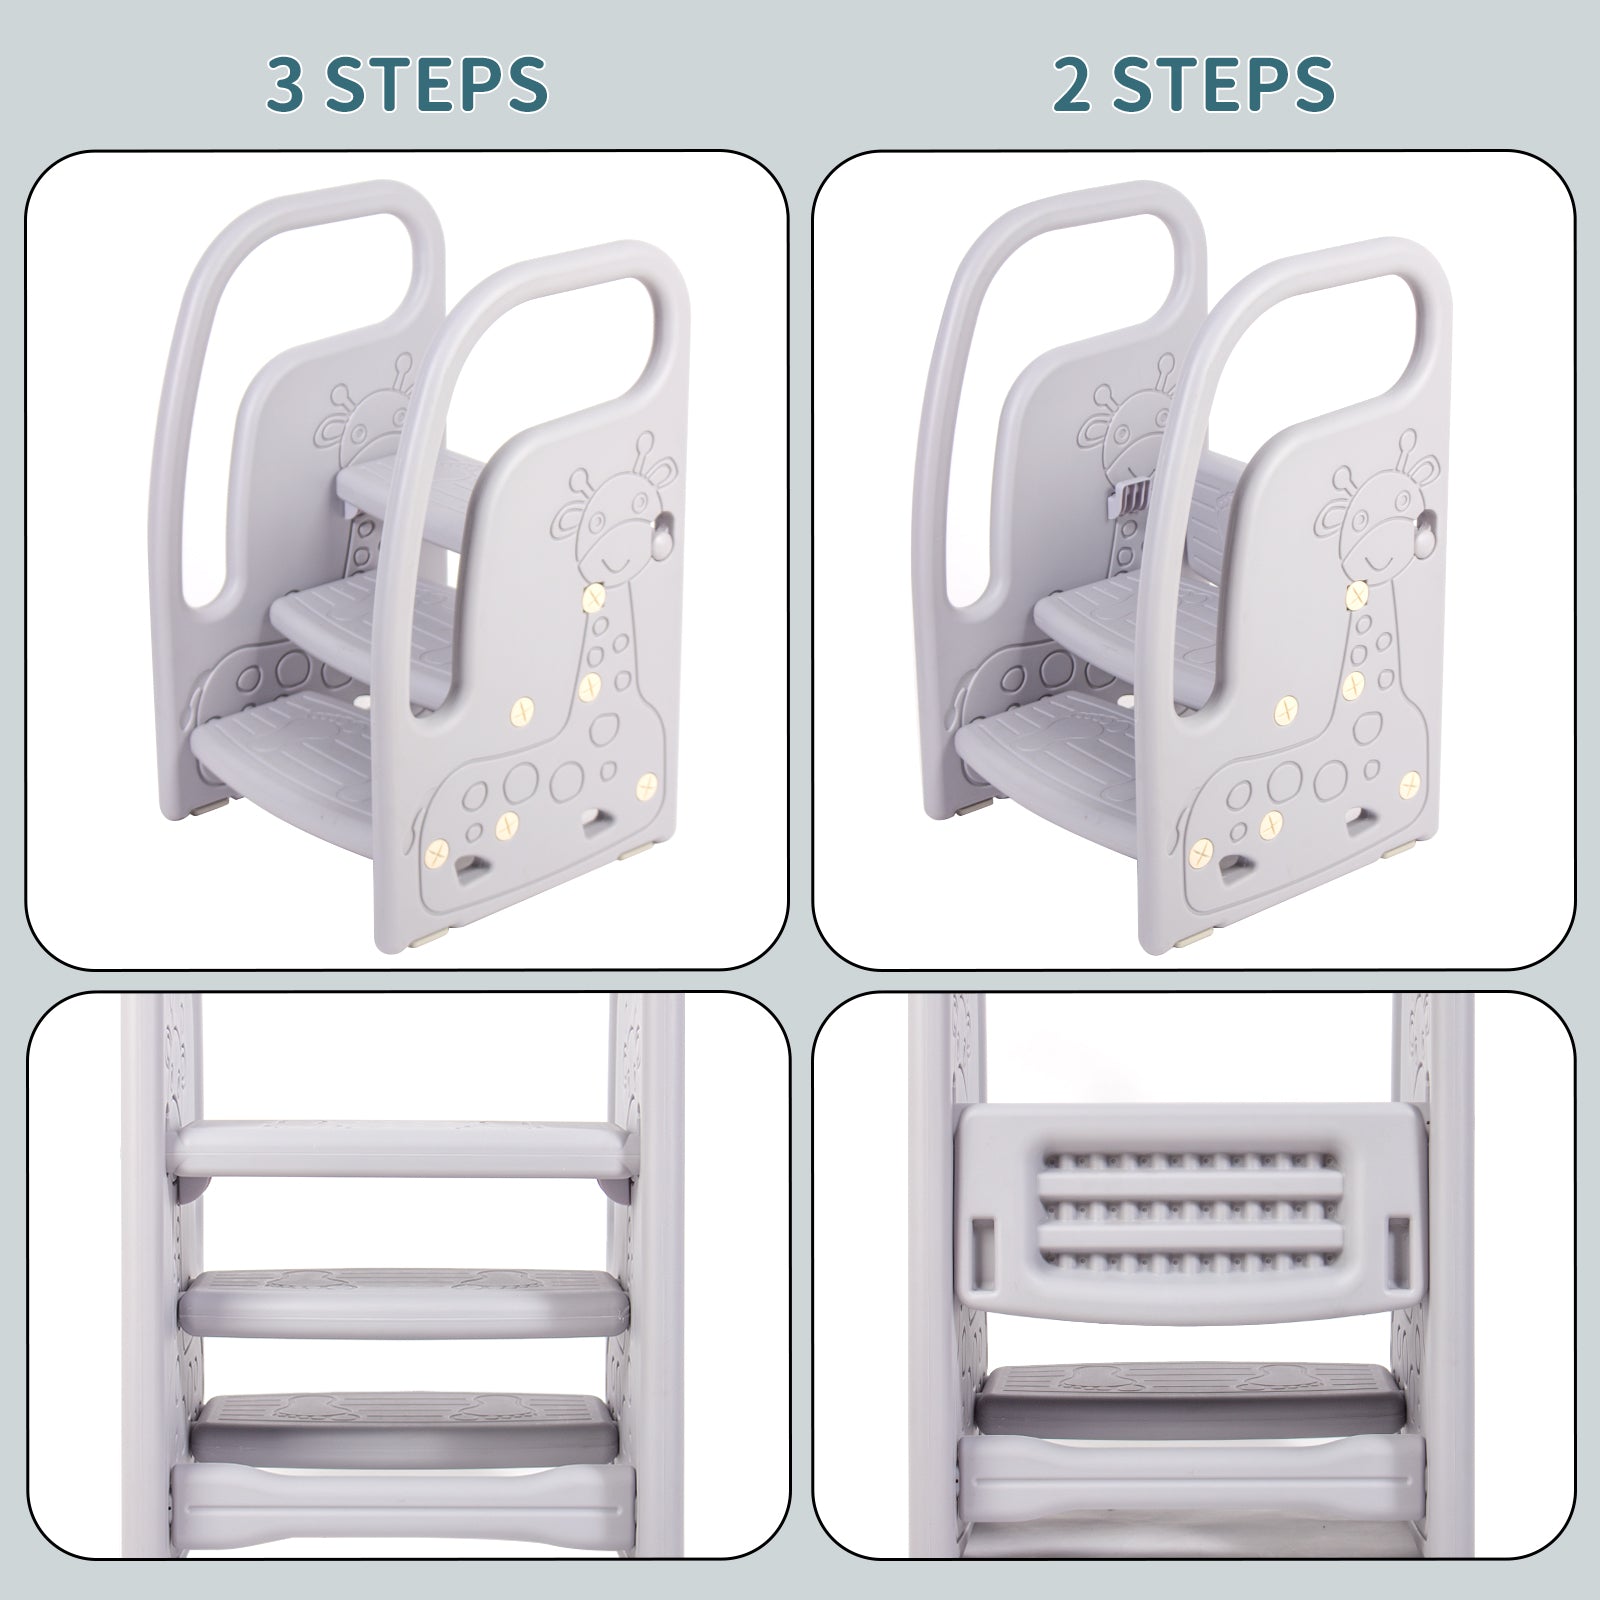 Step-Stool-for-Children-3-Steps-Adjustable-Height-with-Armrests-Anti-Slip-Surface-Children-s-Step-Stool-for-Toilet-Children-s-Bedroom-Bathroom-Kitchen-Light-Grey-Step-Stool-Light-Gray